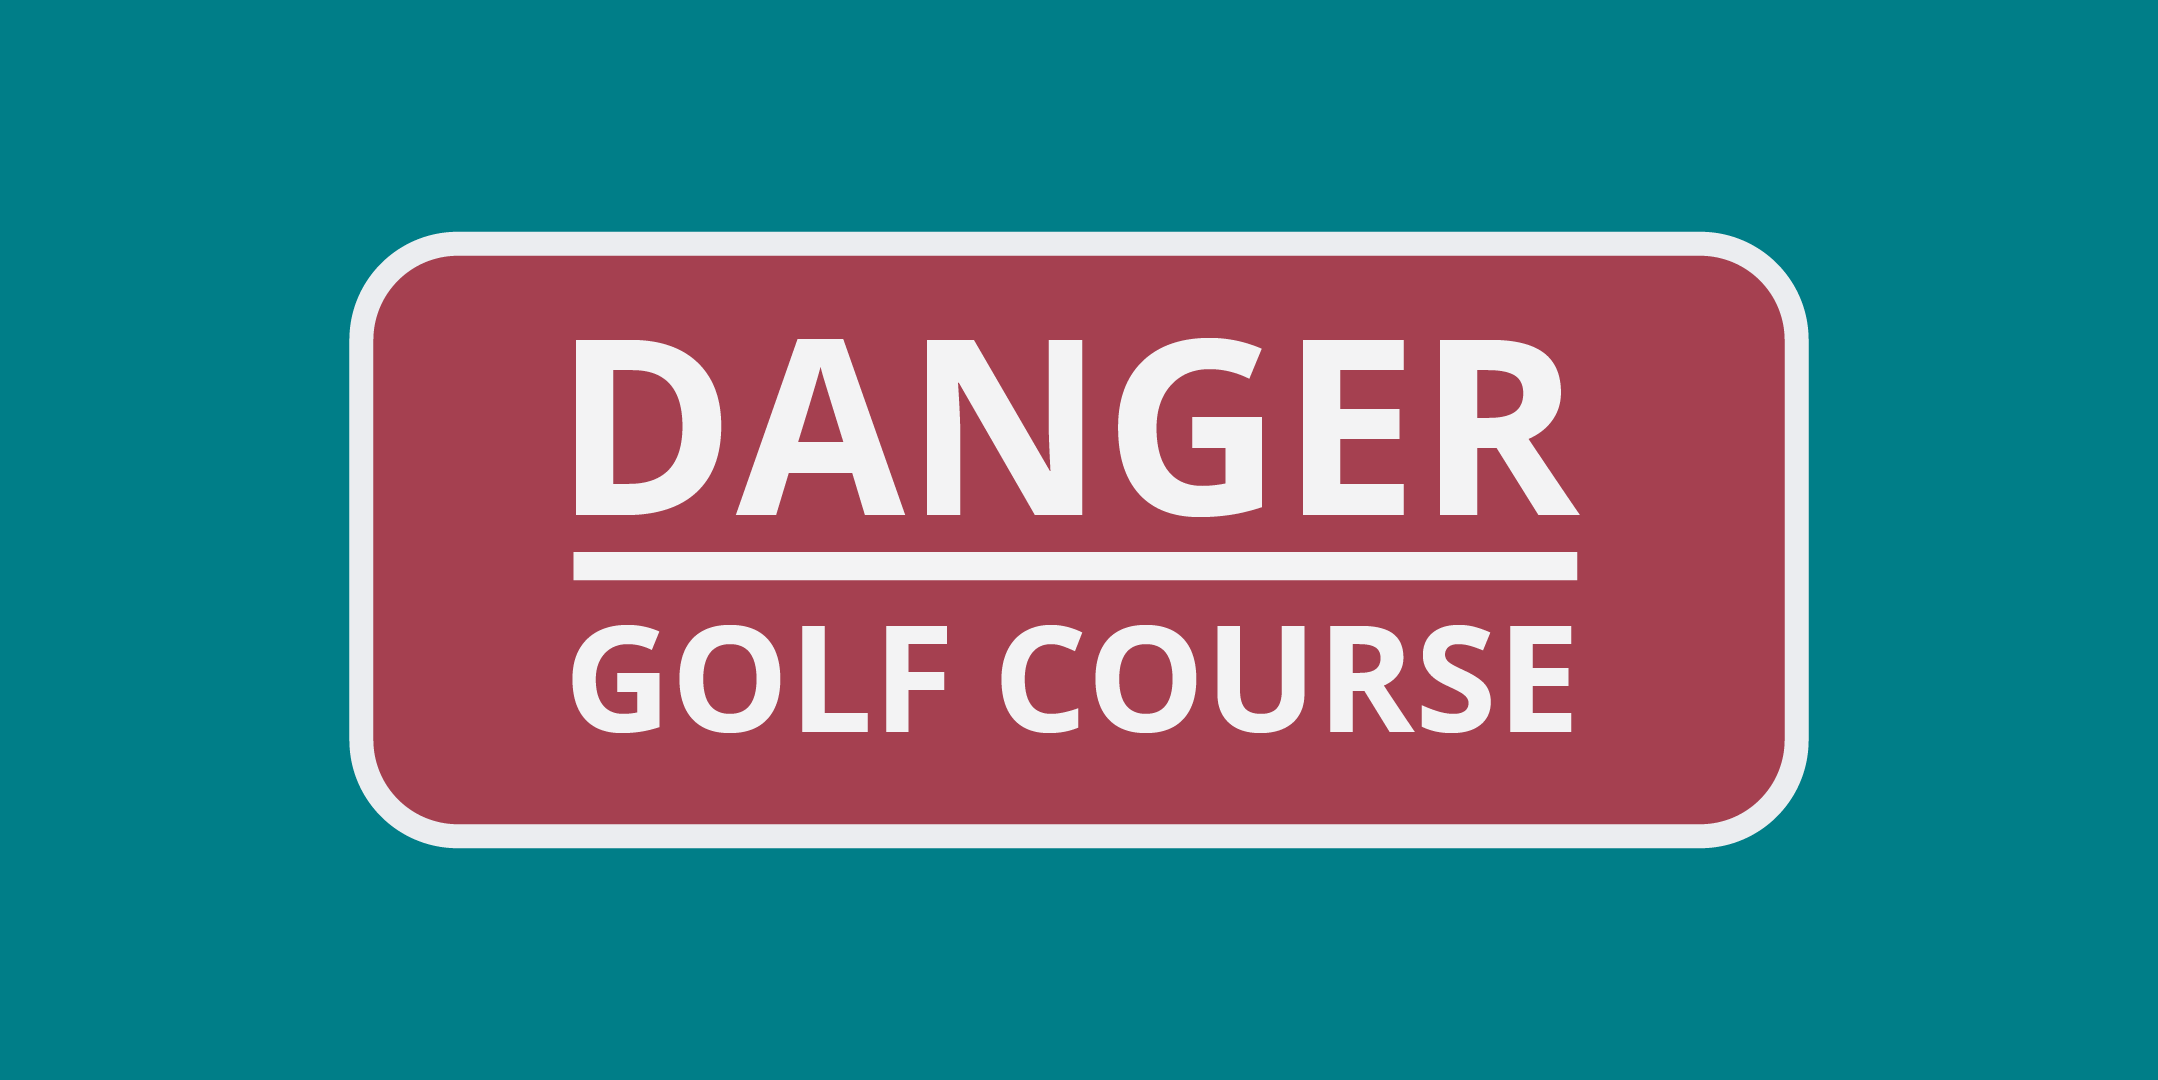 Danger: golf course